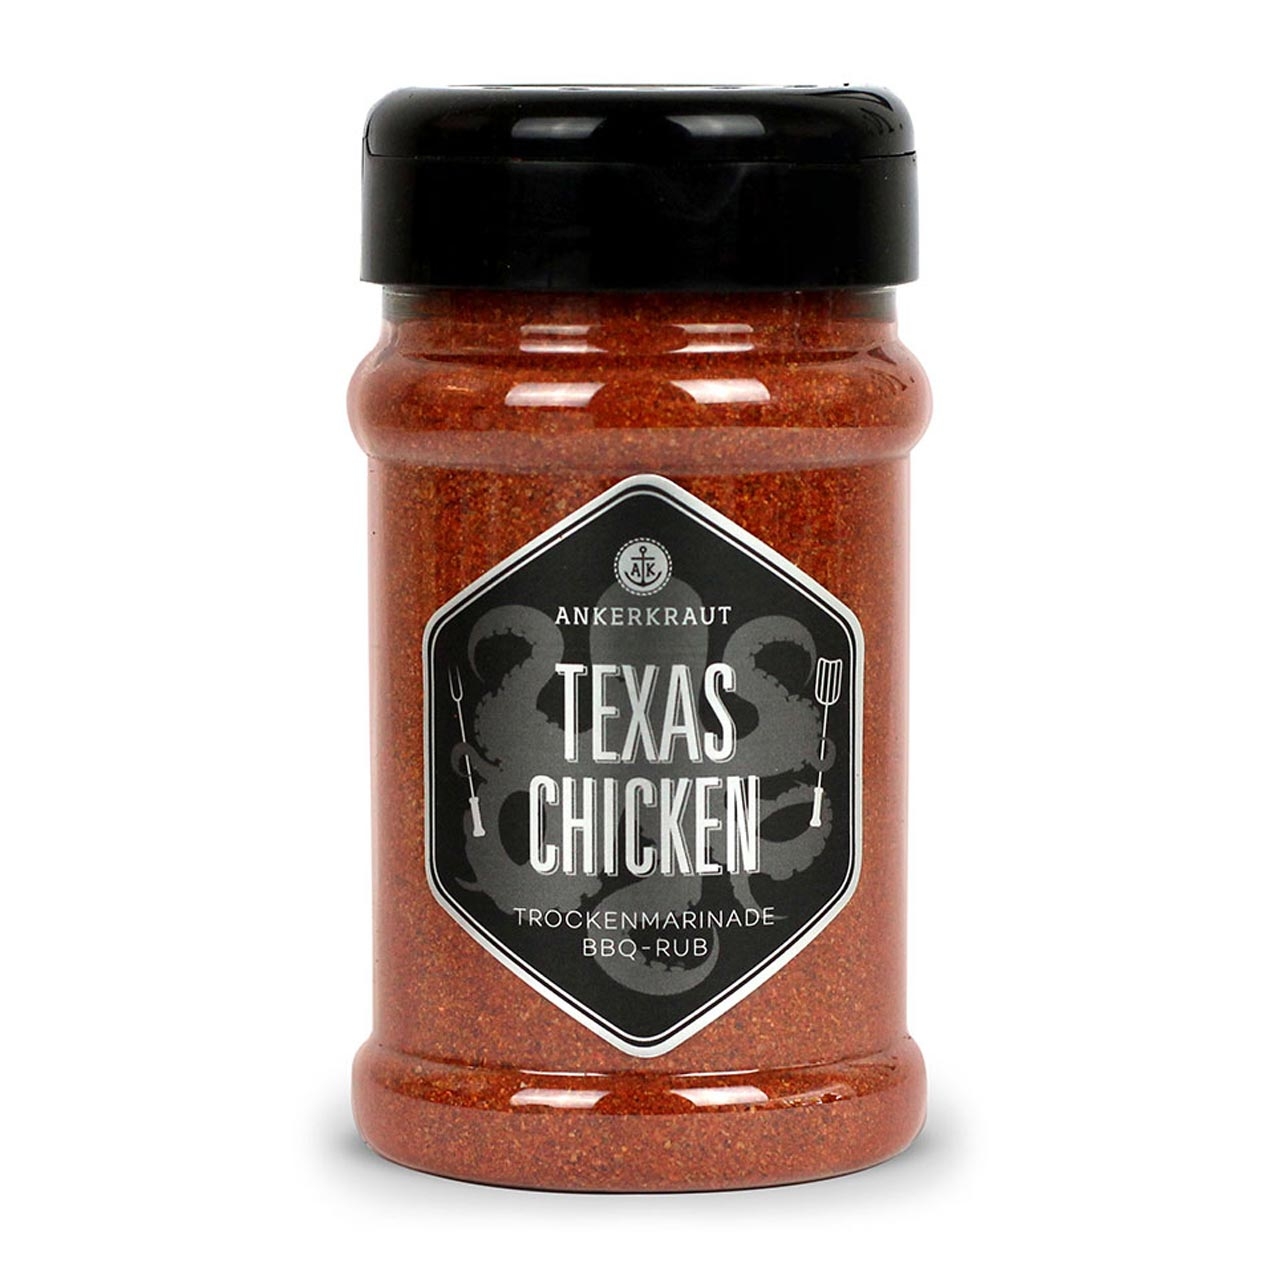 Ankerkraut Texas Chicken